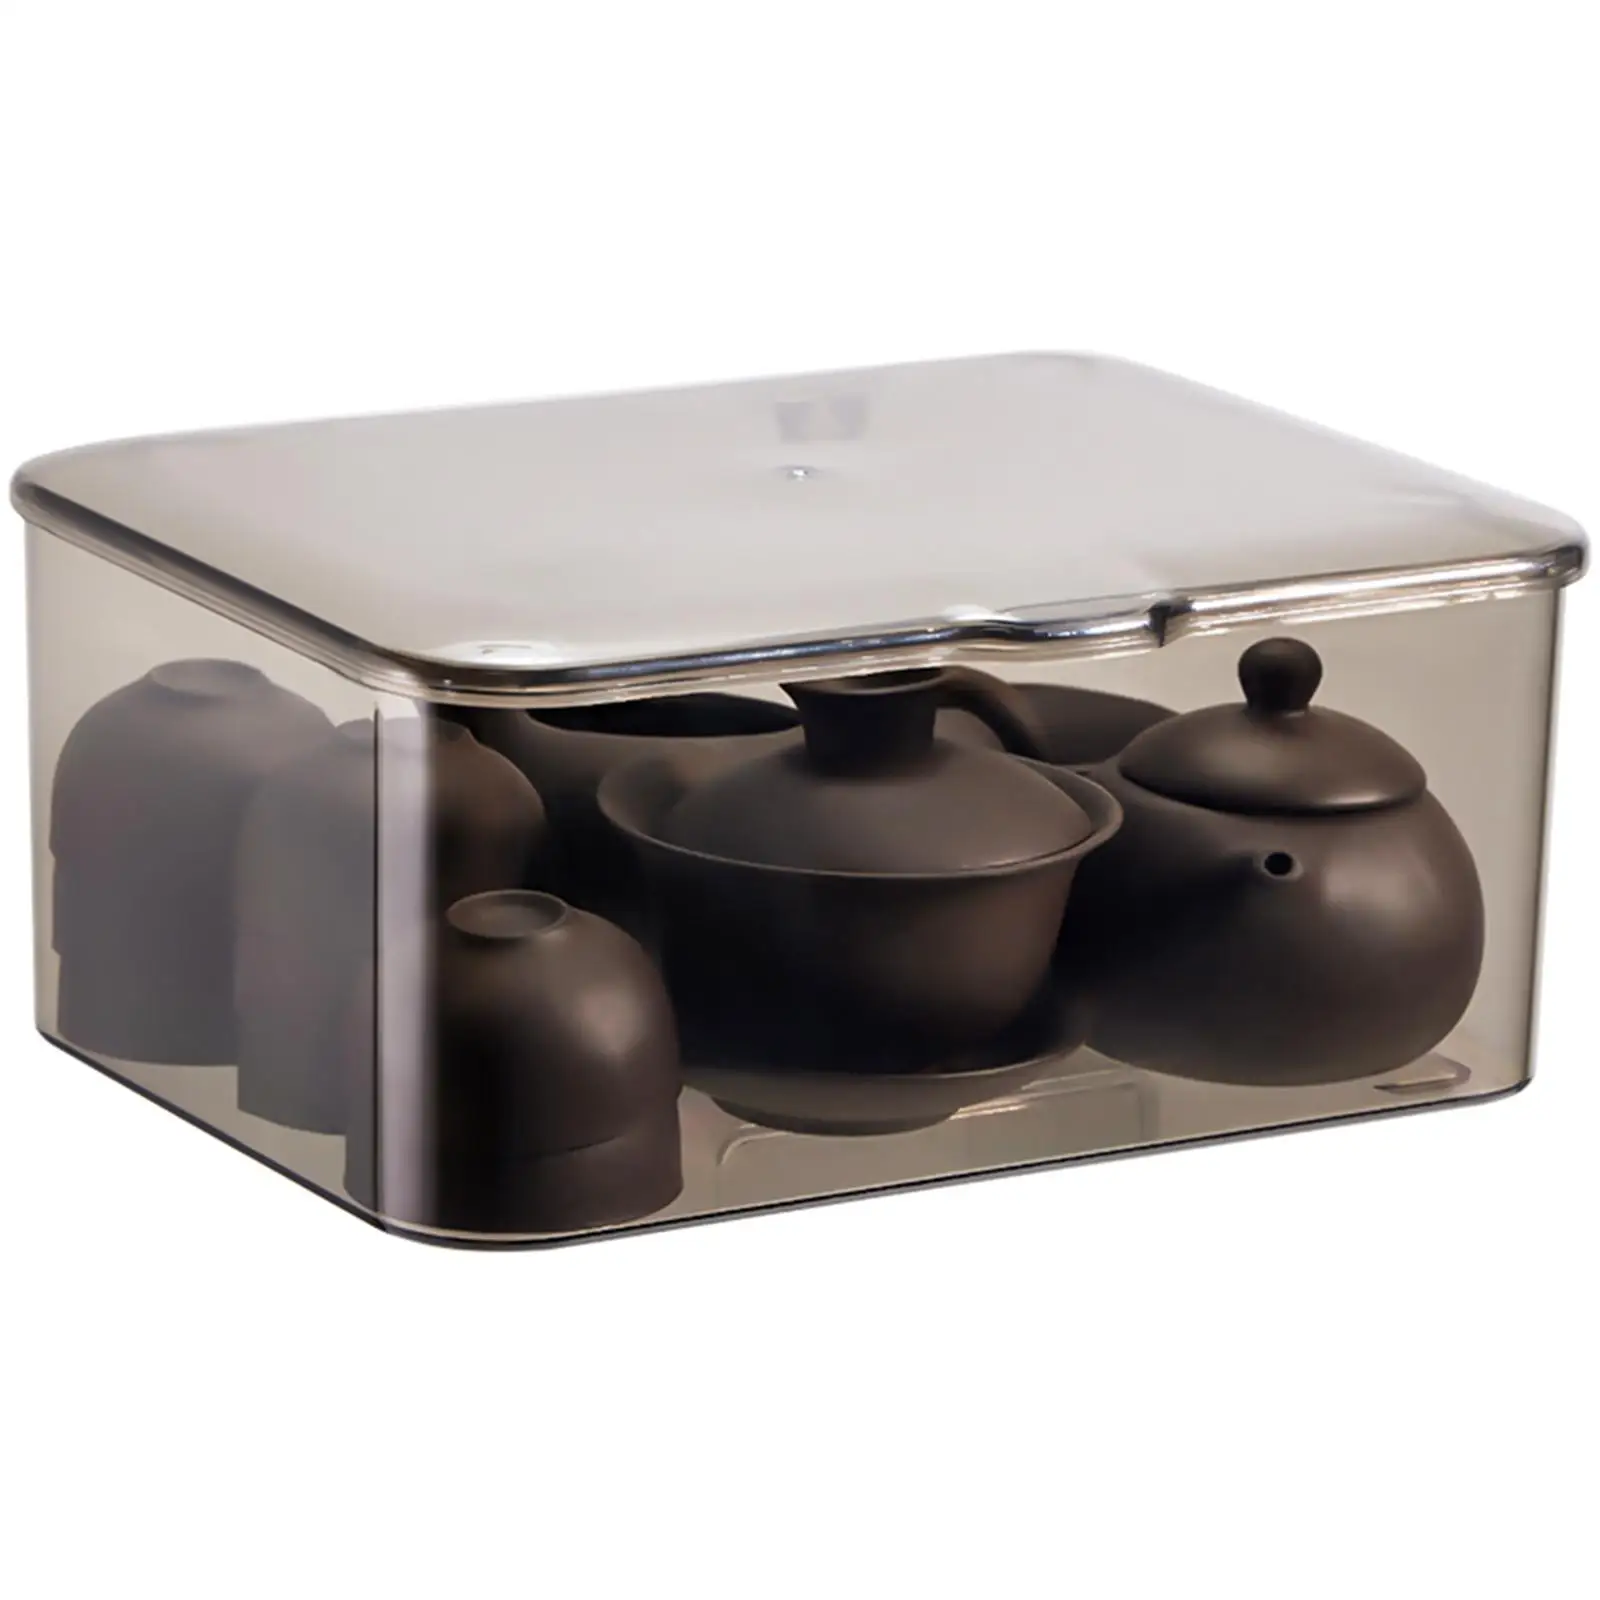 Tea Set Storage Box with Lids Tea Milk Bags Storage Holder Container Desktop Organizer for Bathroom Dining Room Kitchen Desk